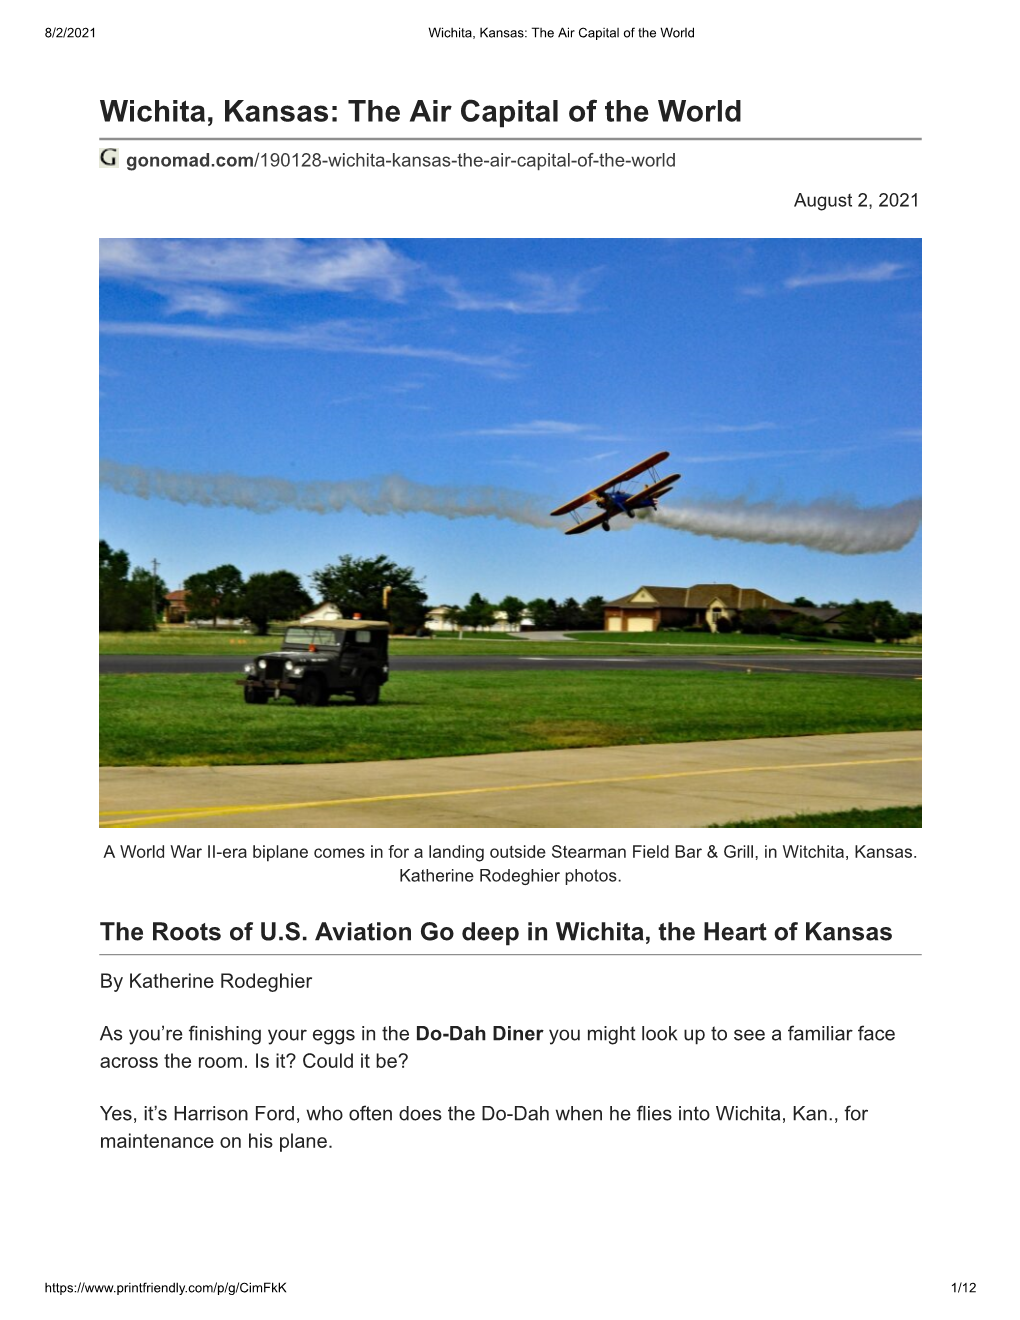 Wichita, Kansas: the Air Capital of the World